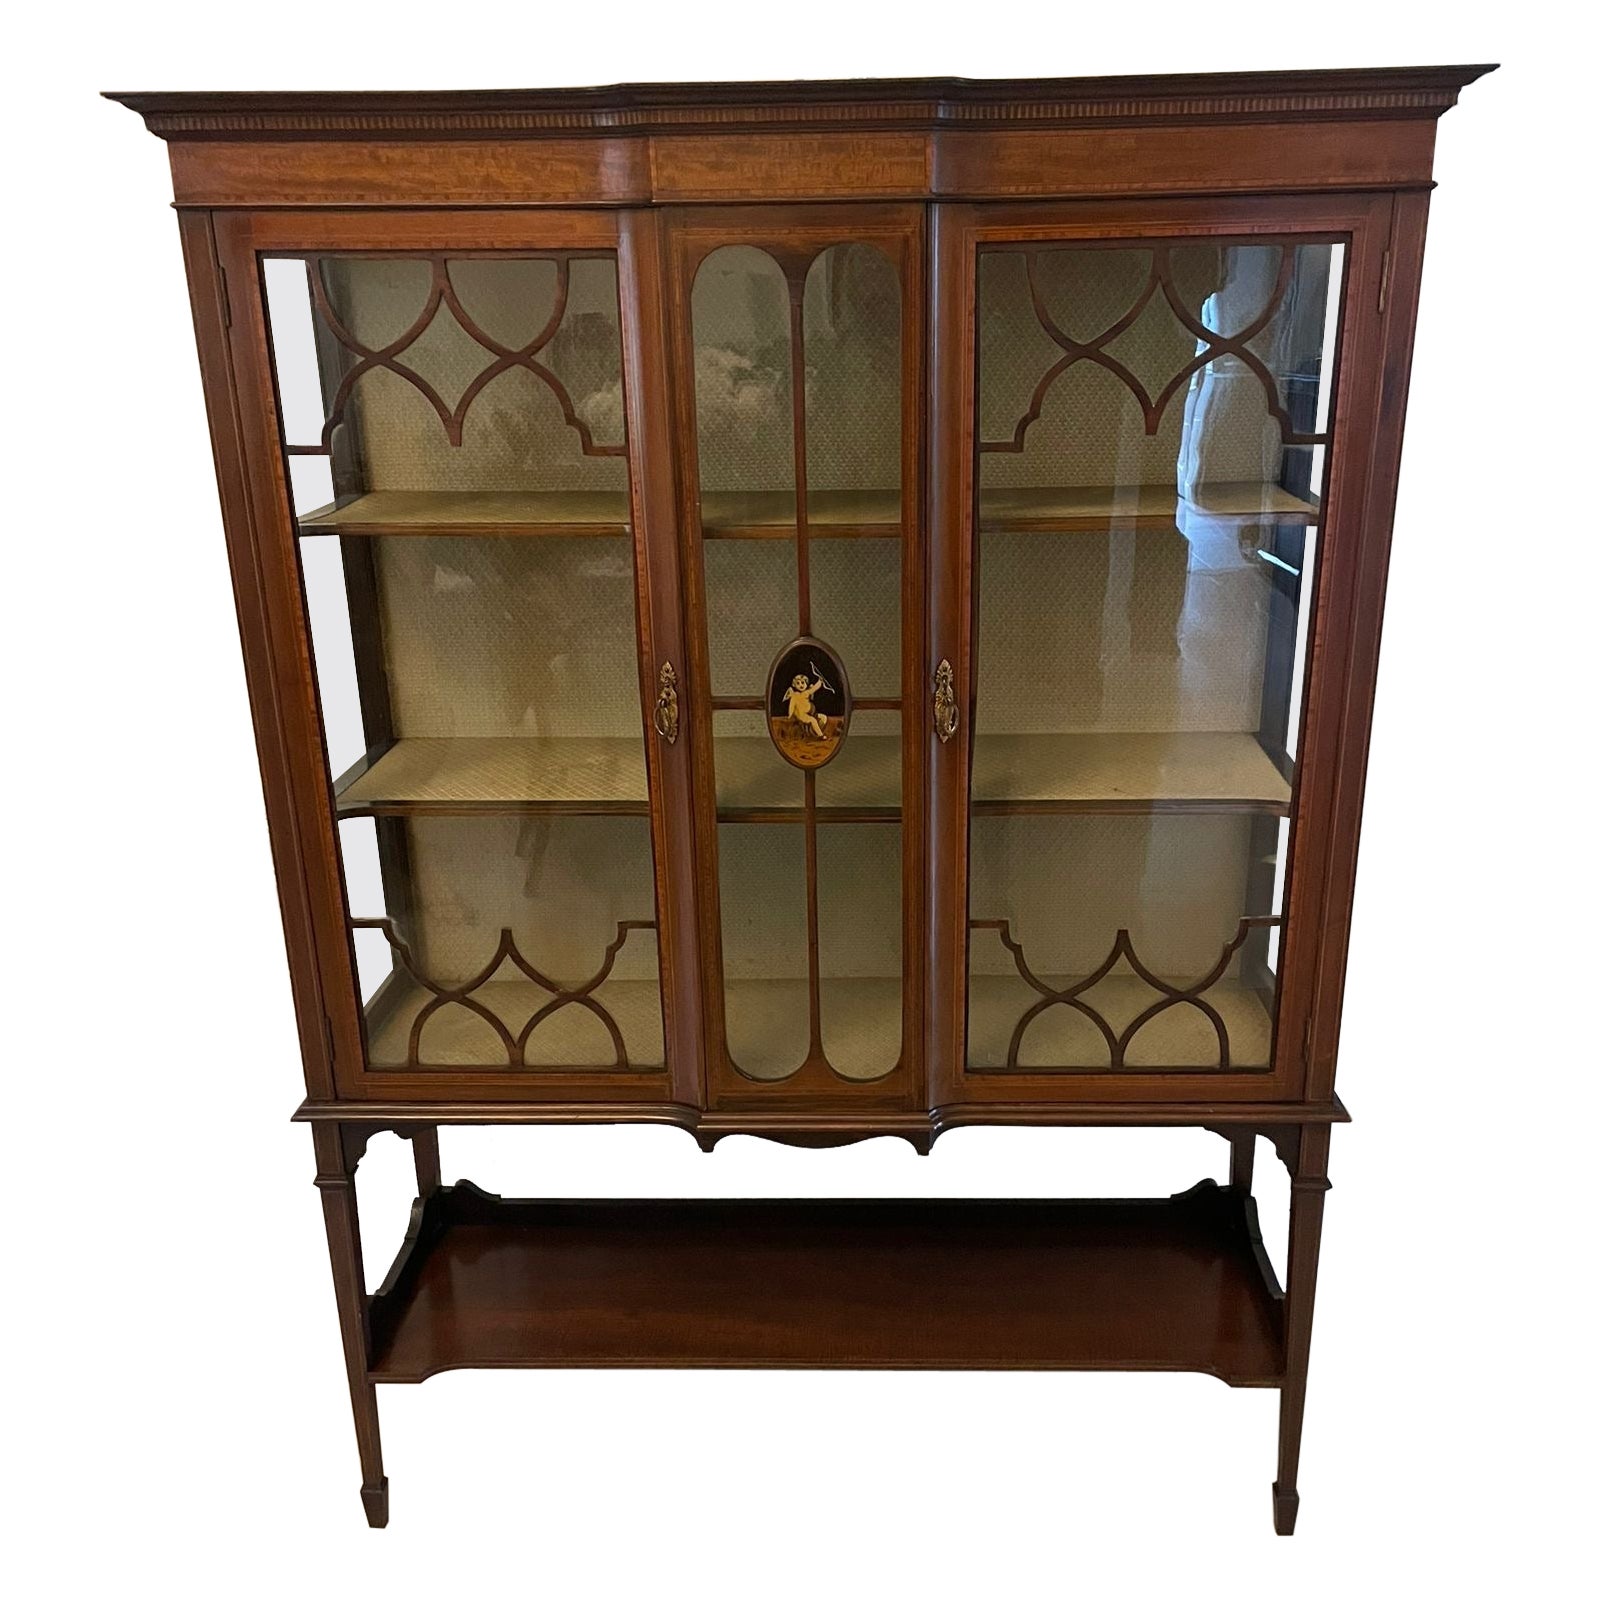 Antique Edwardian Superb Quality Inlaid Mahogany Display Cabinet 